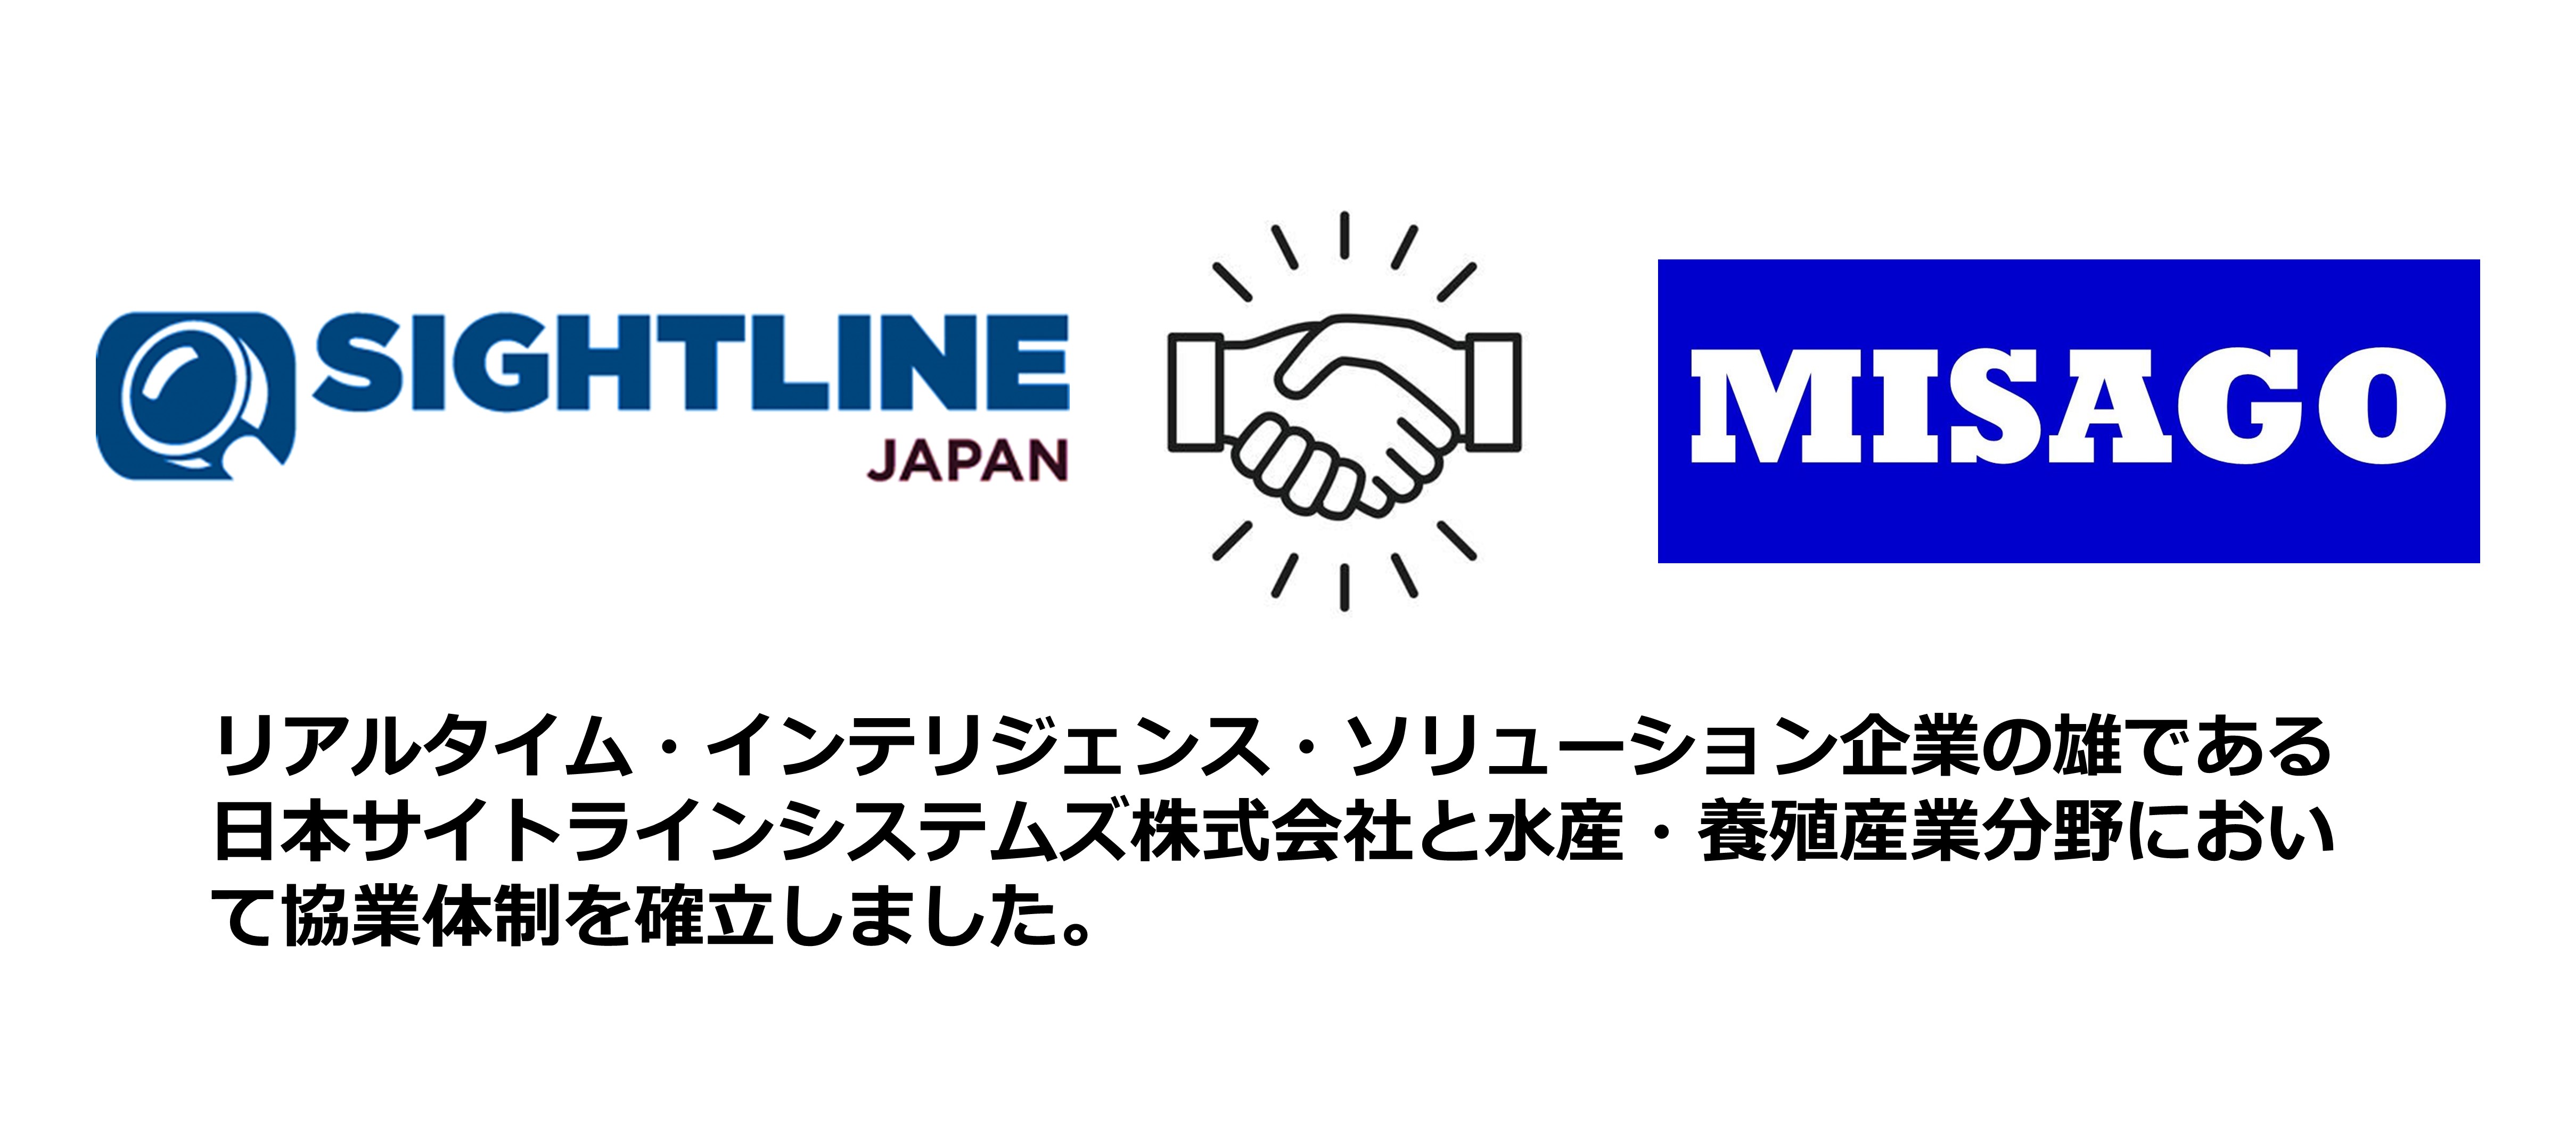 Sightline Systems Japan